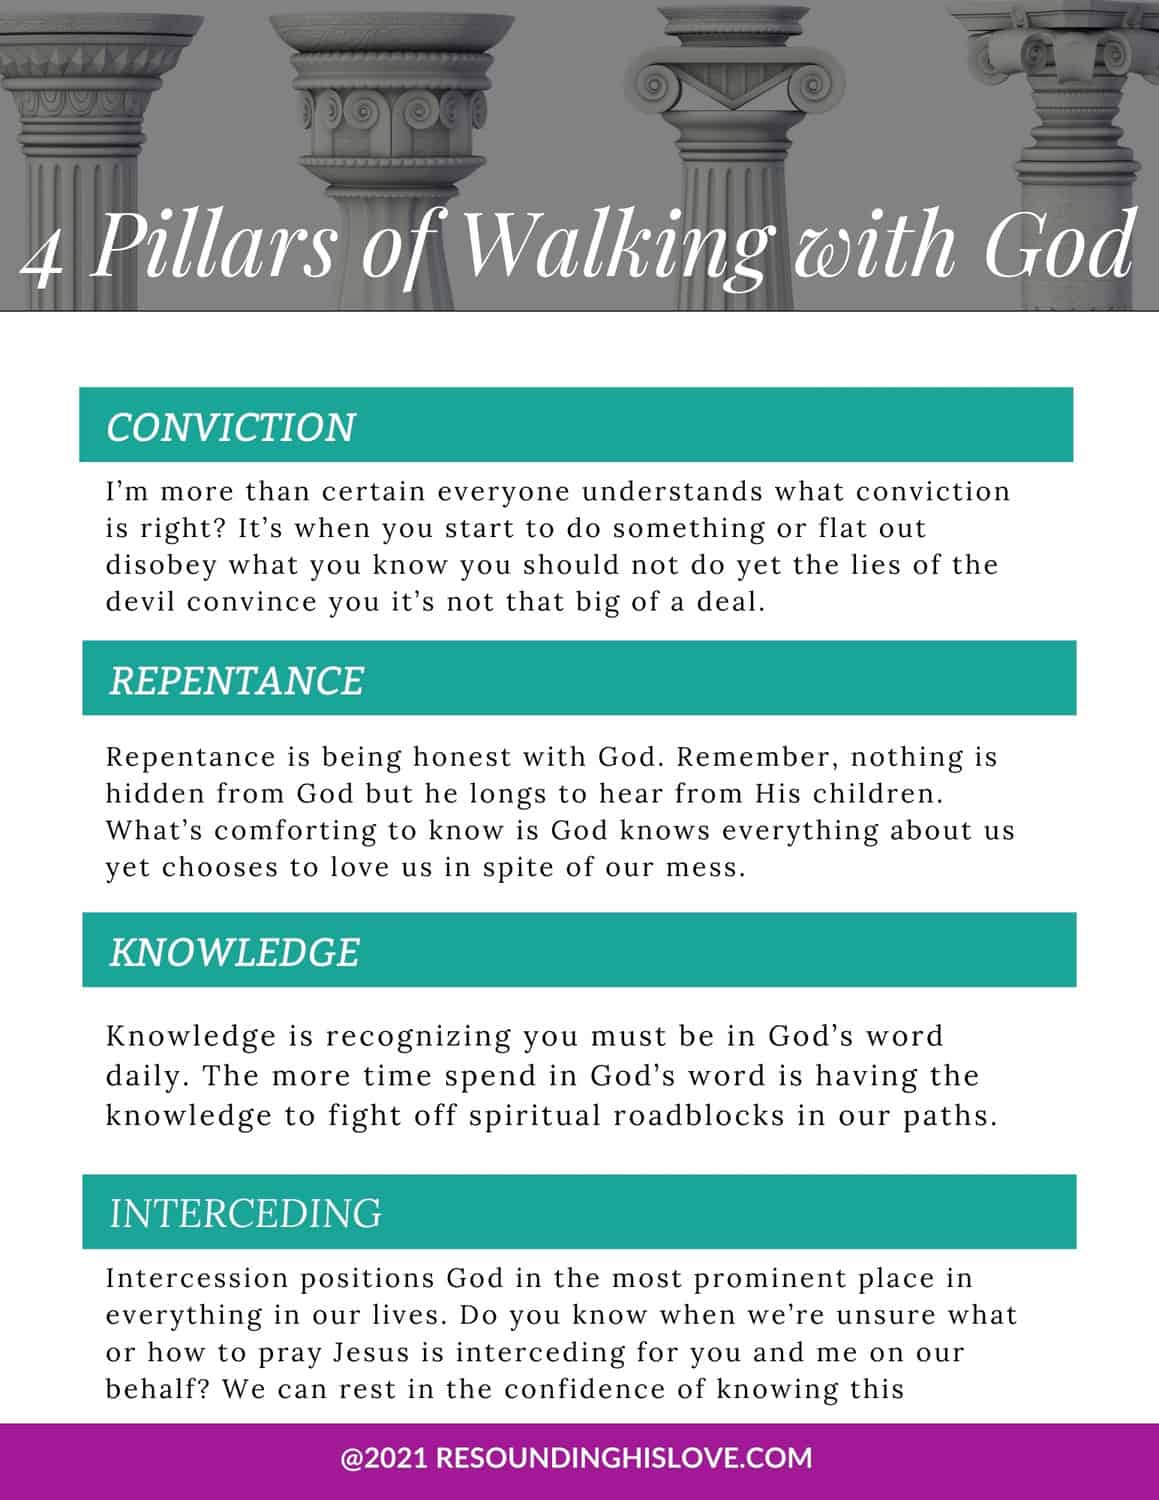 4 Pillars of Walking with God